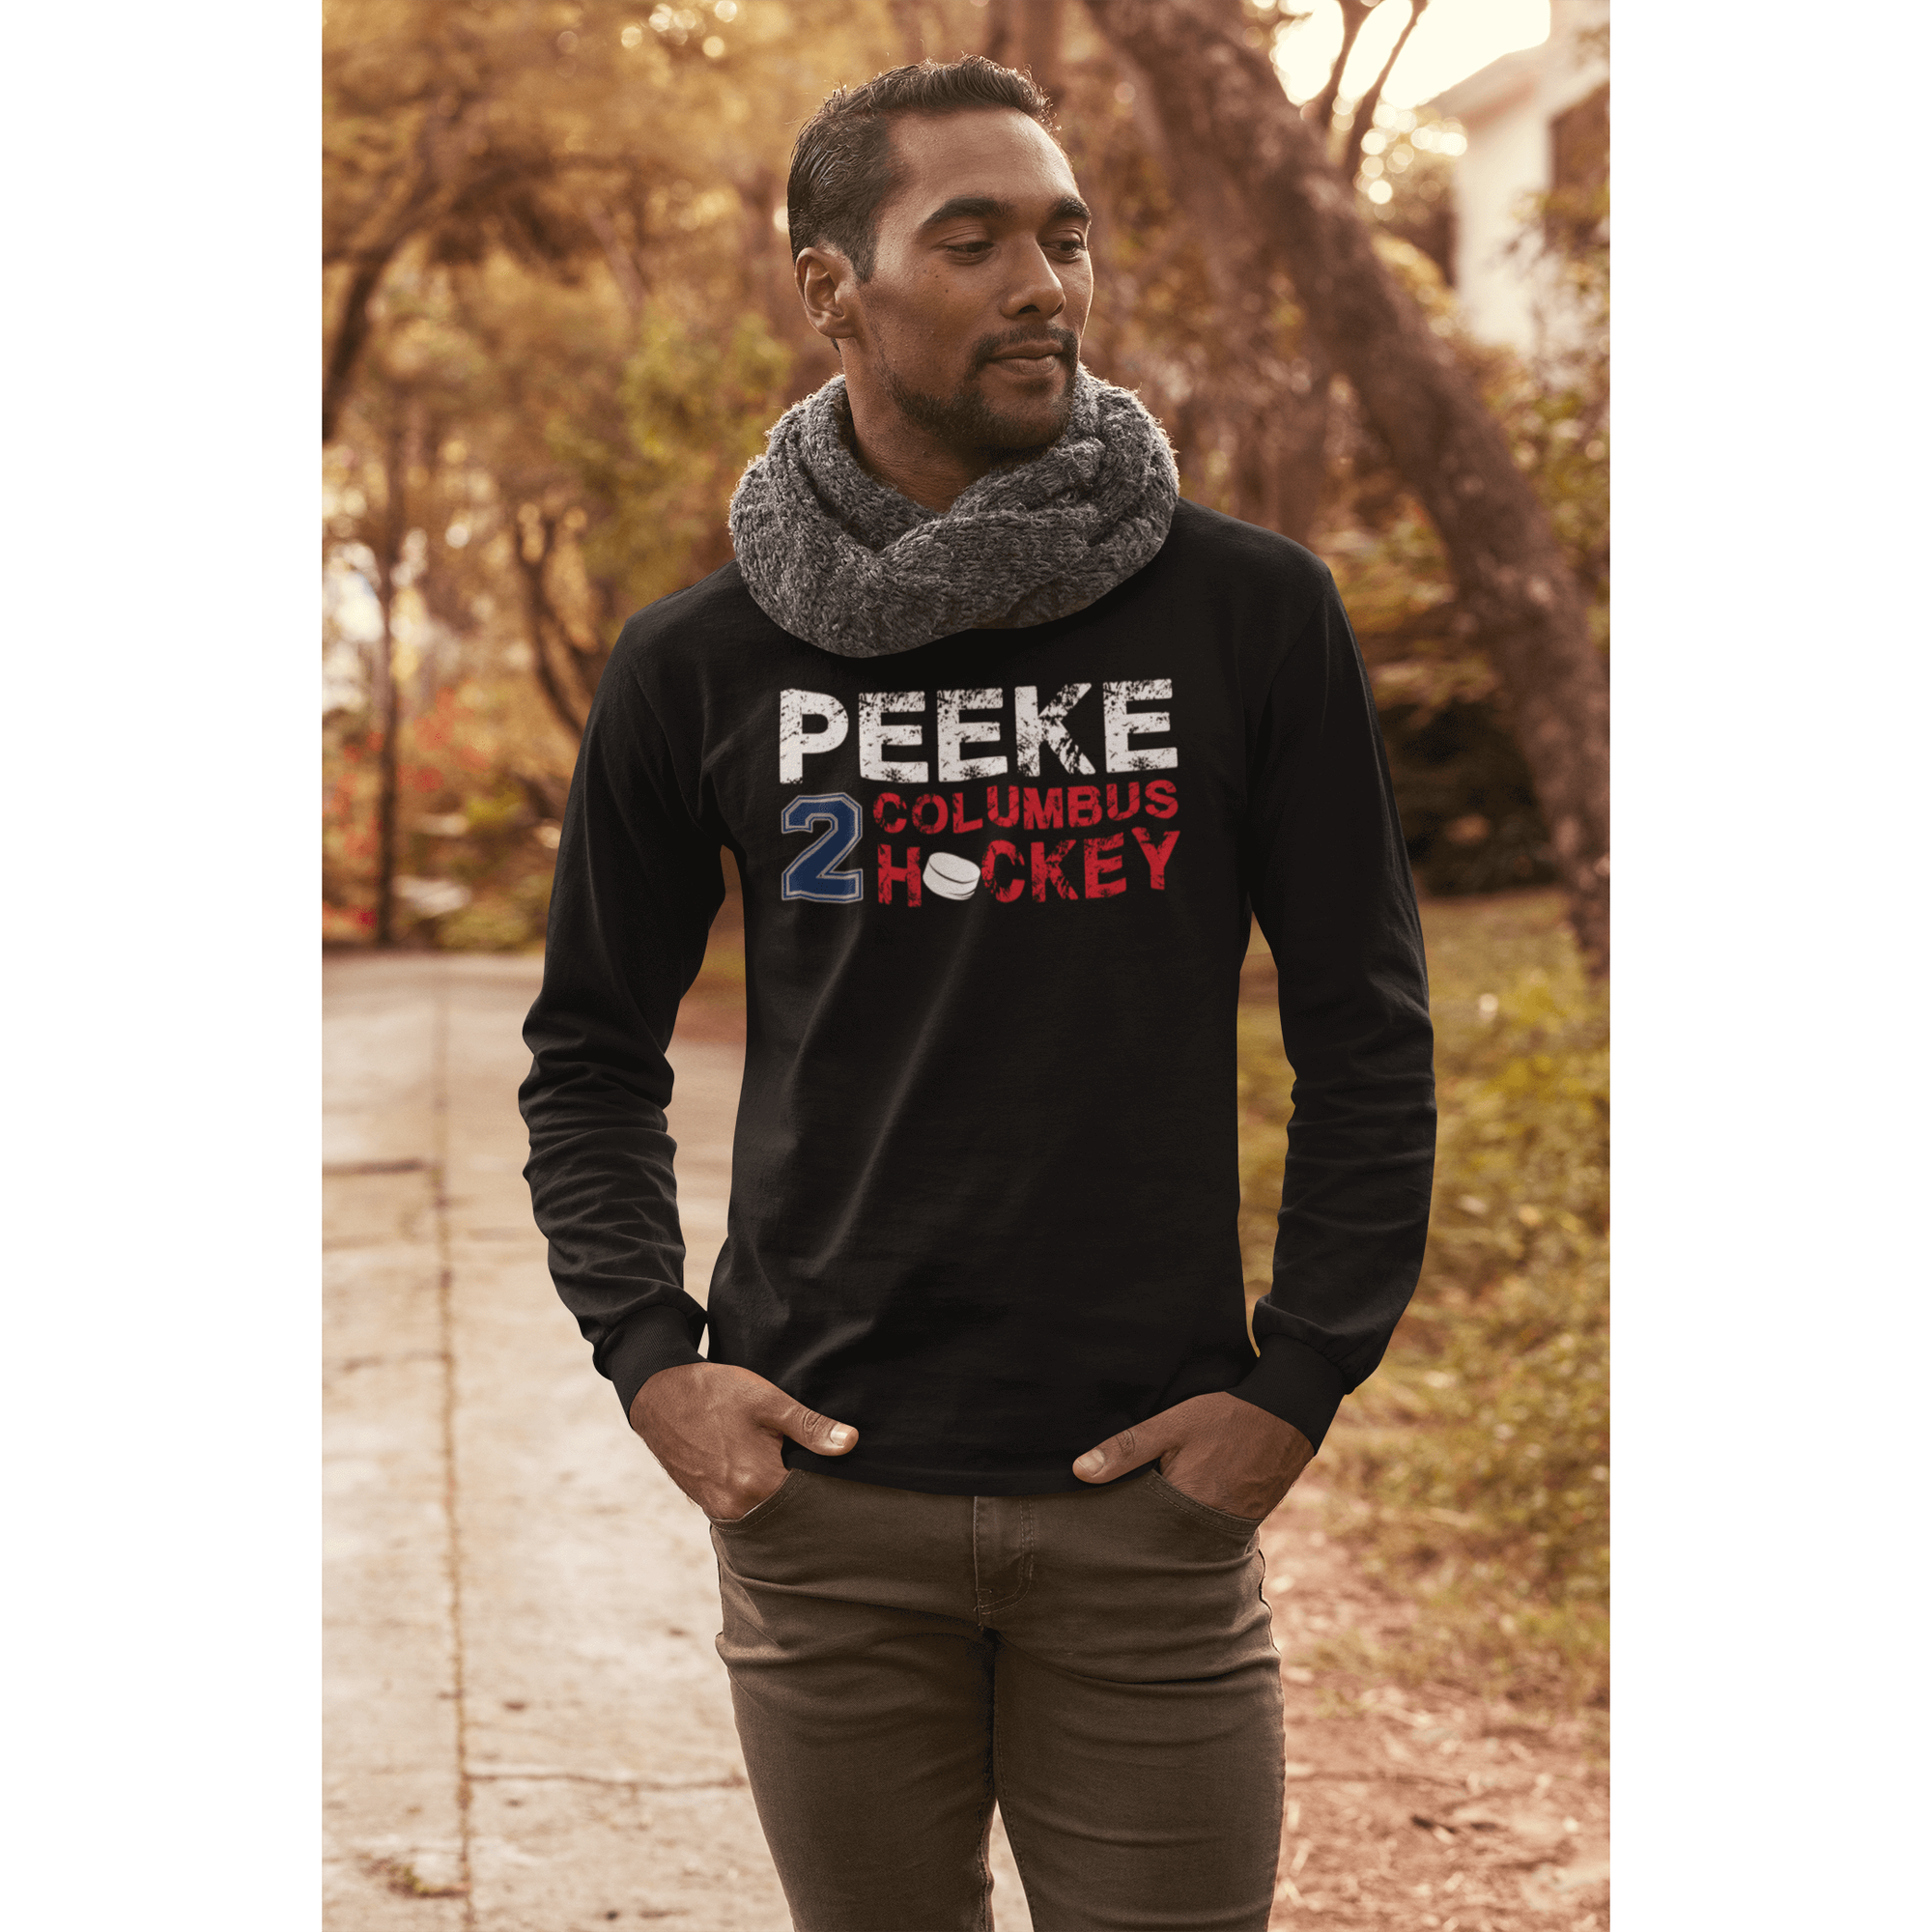 Peeke 2 Columbus Hockey Unisex Jersey Long Sleeve Shirt